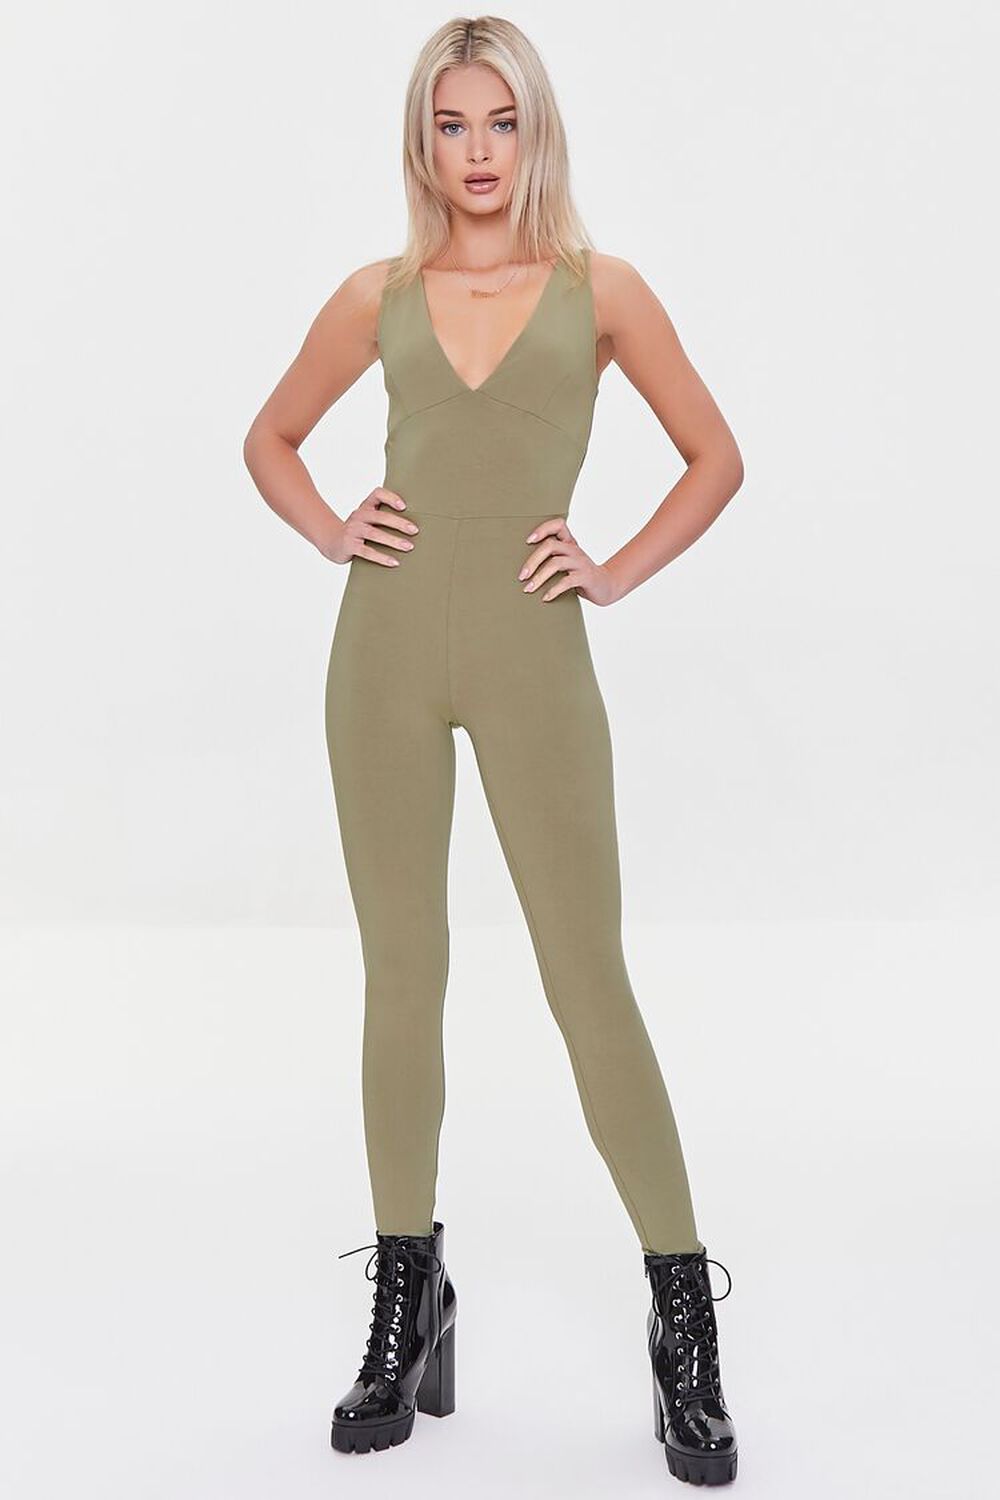 OLIVE Plunging Form-Fitting Jumpsuit, image 1